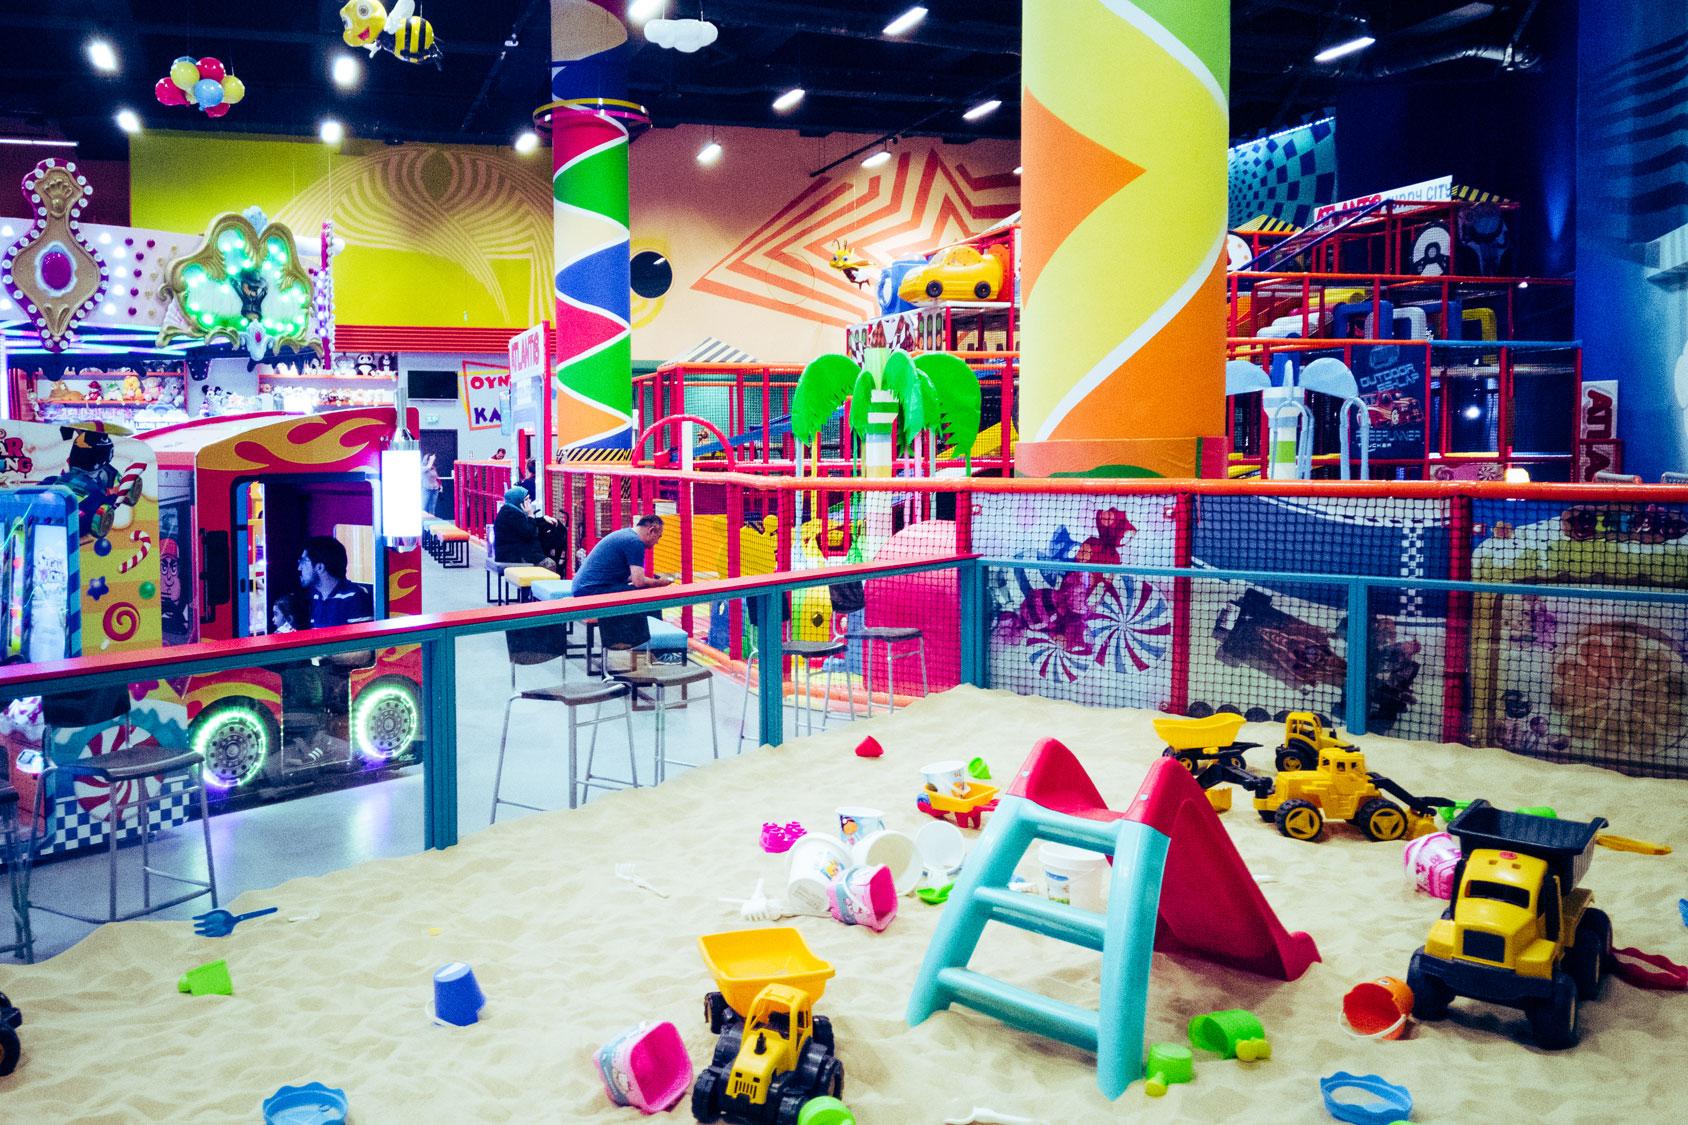 kum hockey, table tennis, fuseball, bright colored family entertainment centre